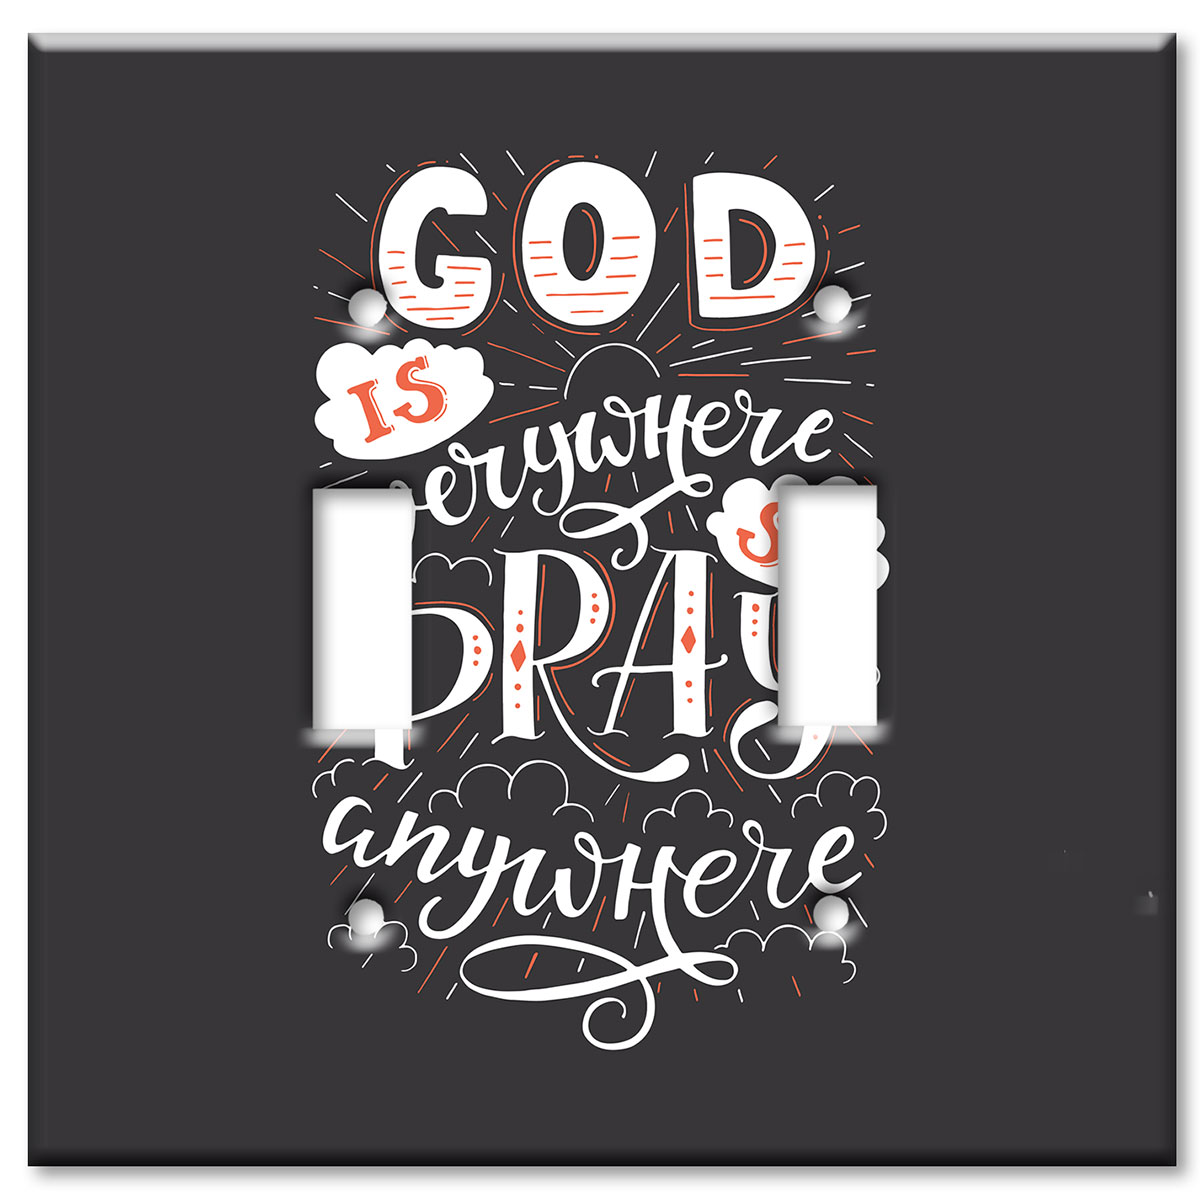 God is Everywhere - #2673